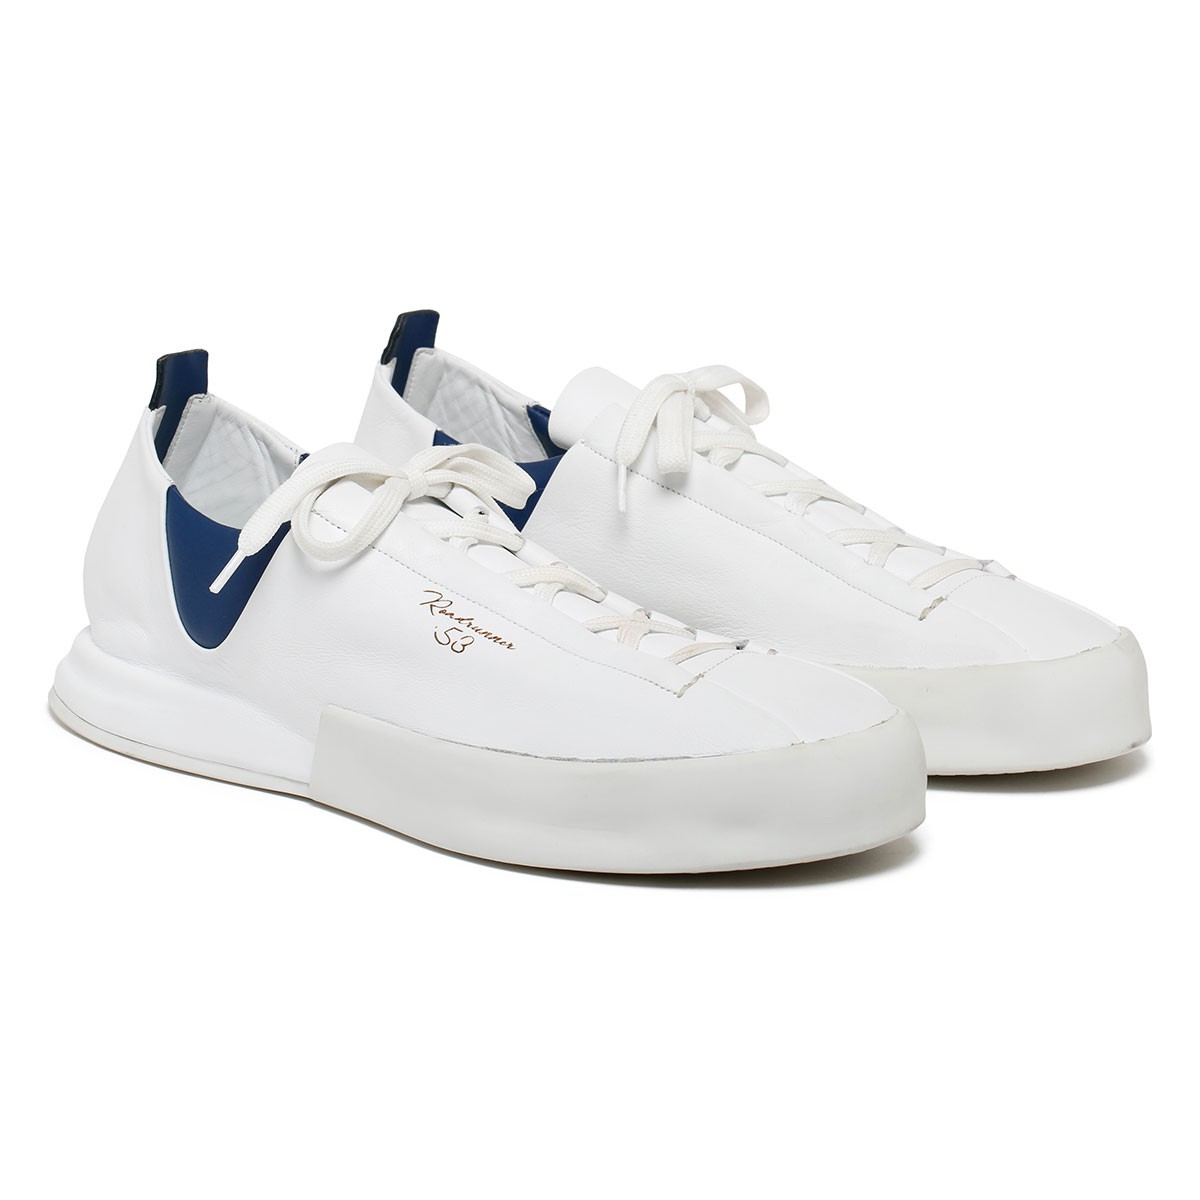 Carosi white and blue sneakers